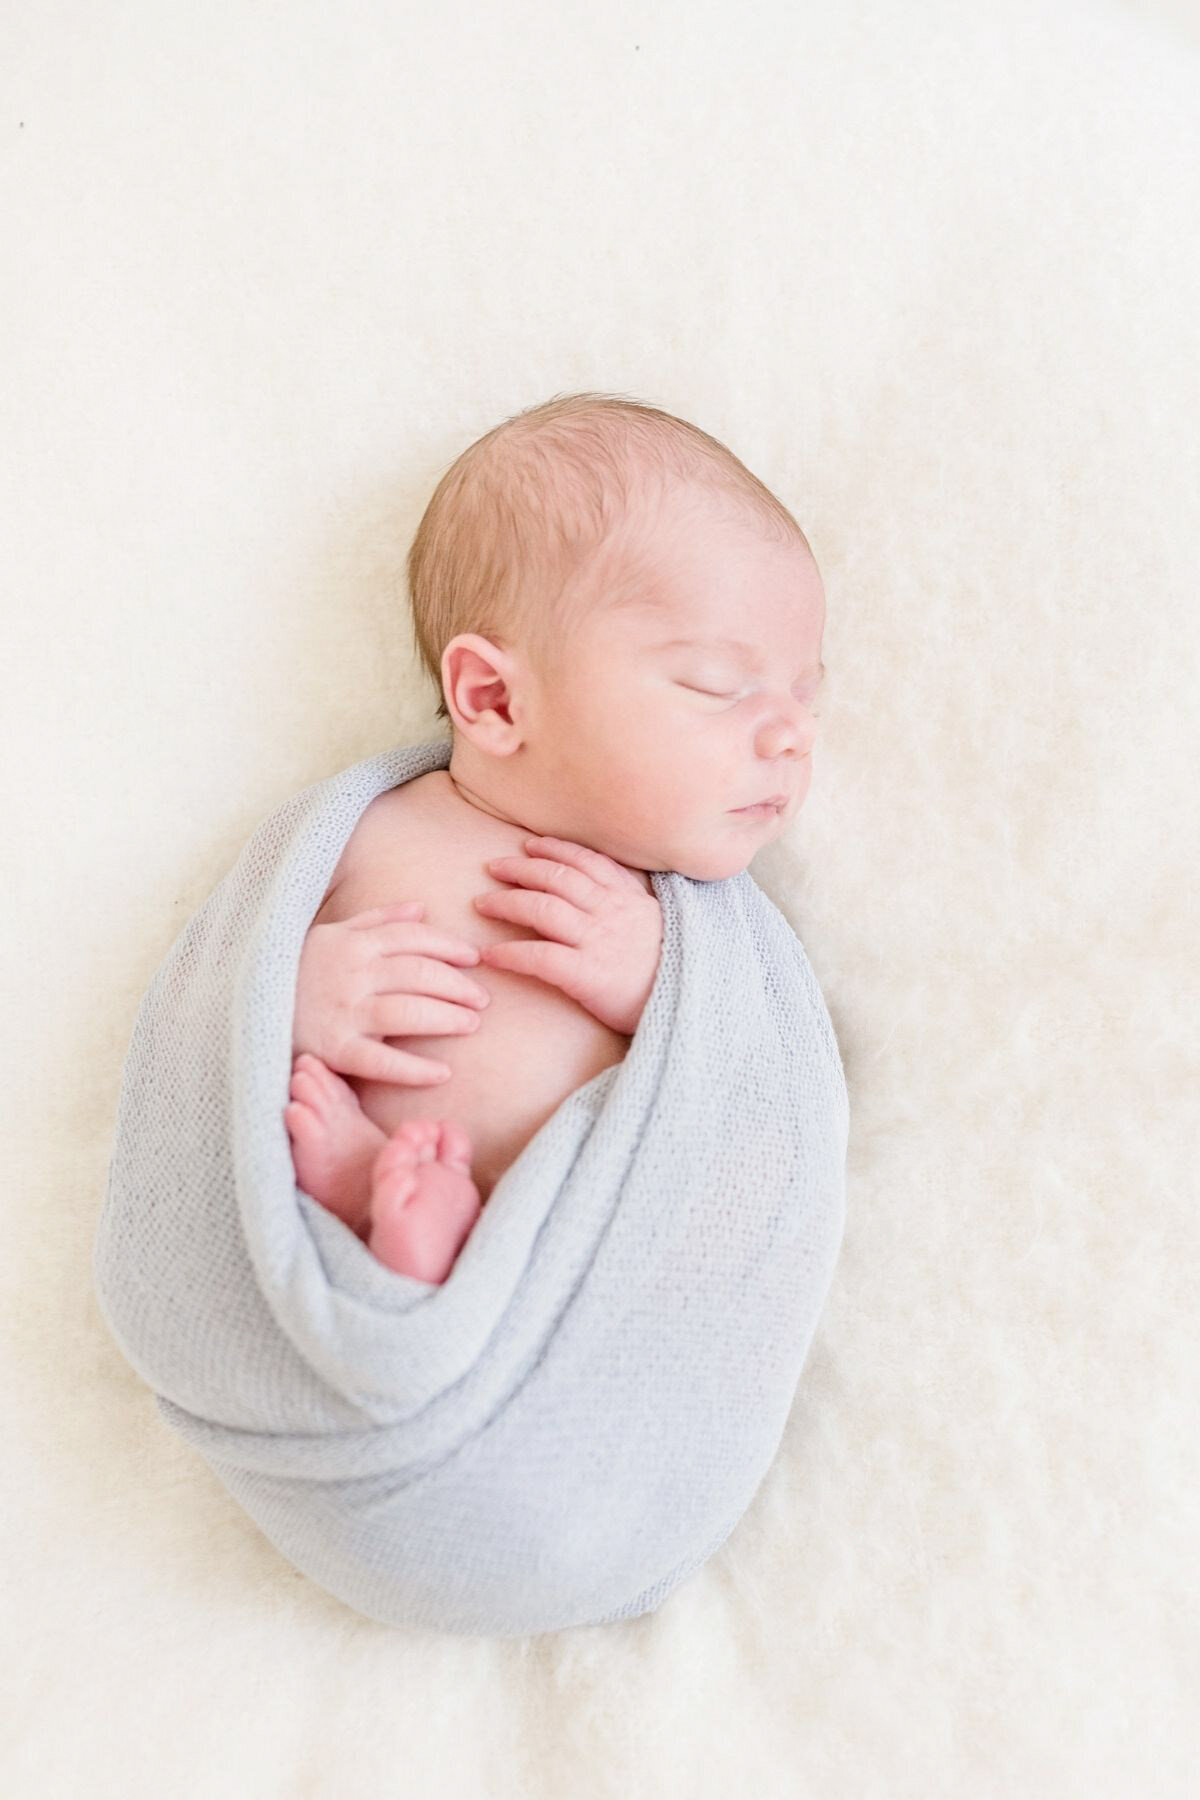 Newborn wrapped in blue